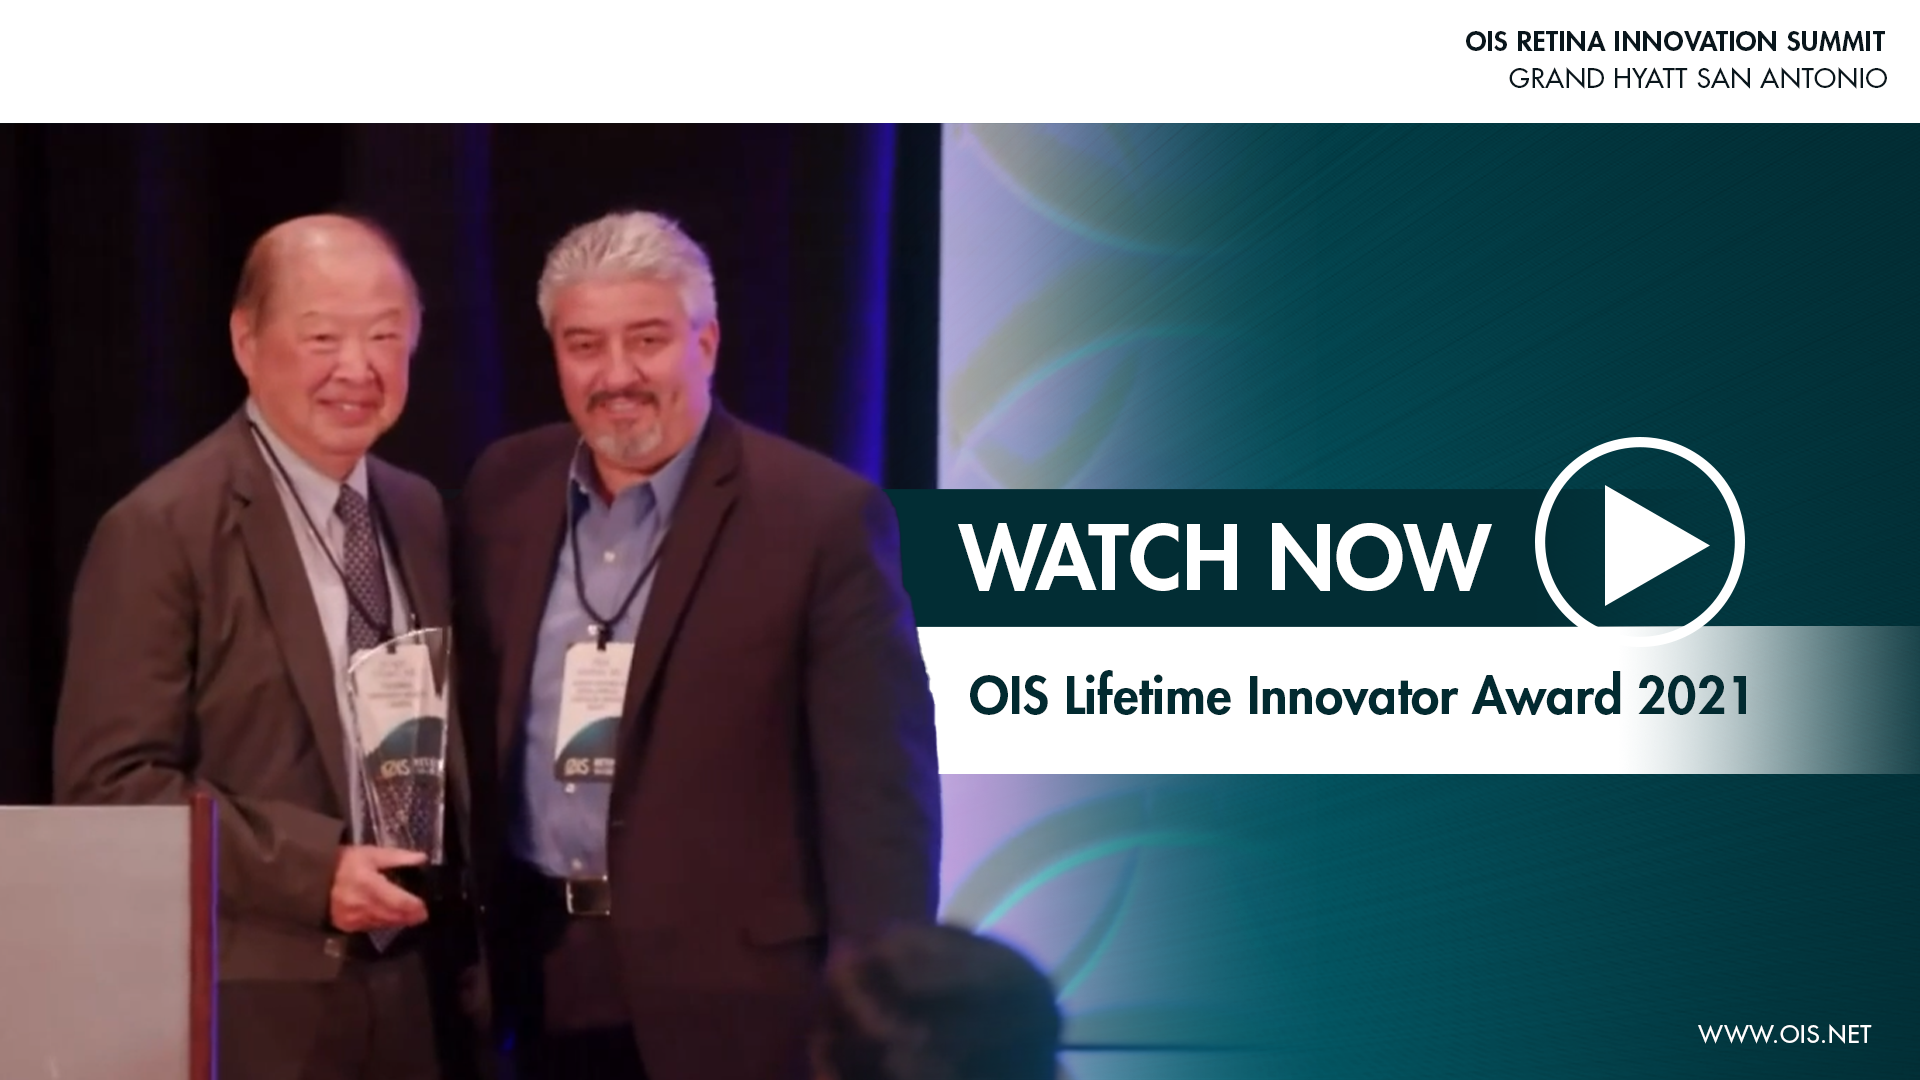 Watch Now - OIS Lifetime Innovator Award 2021